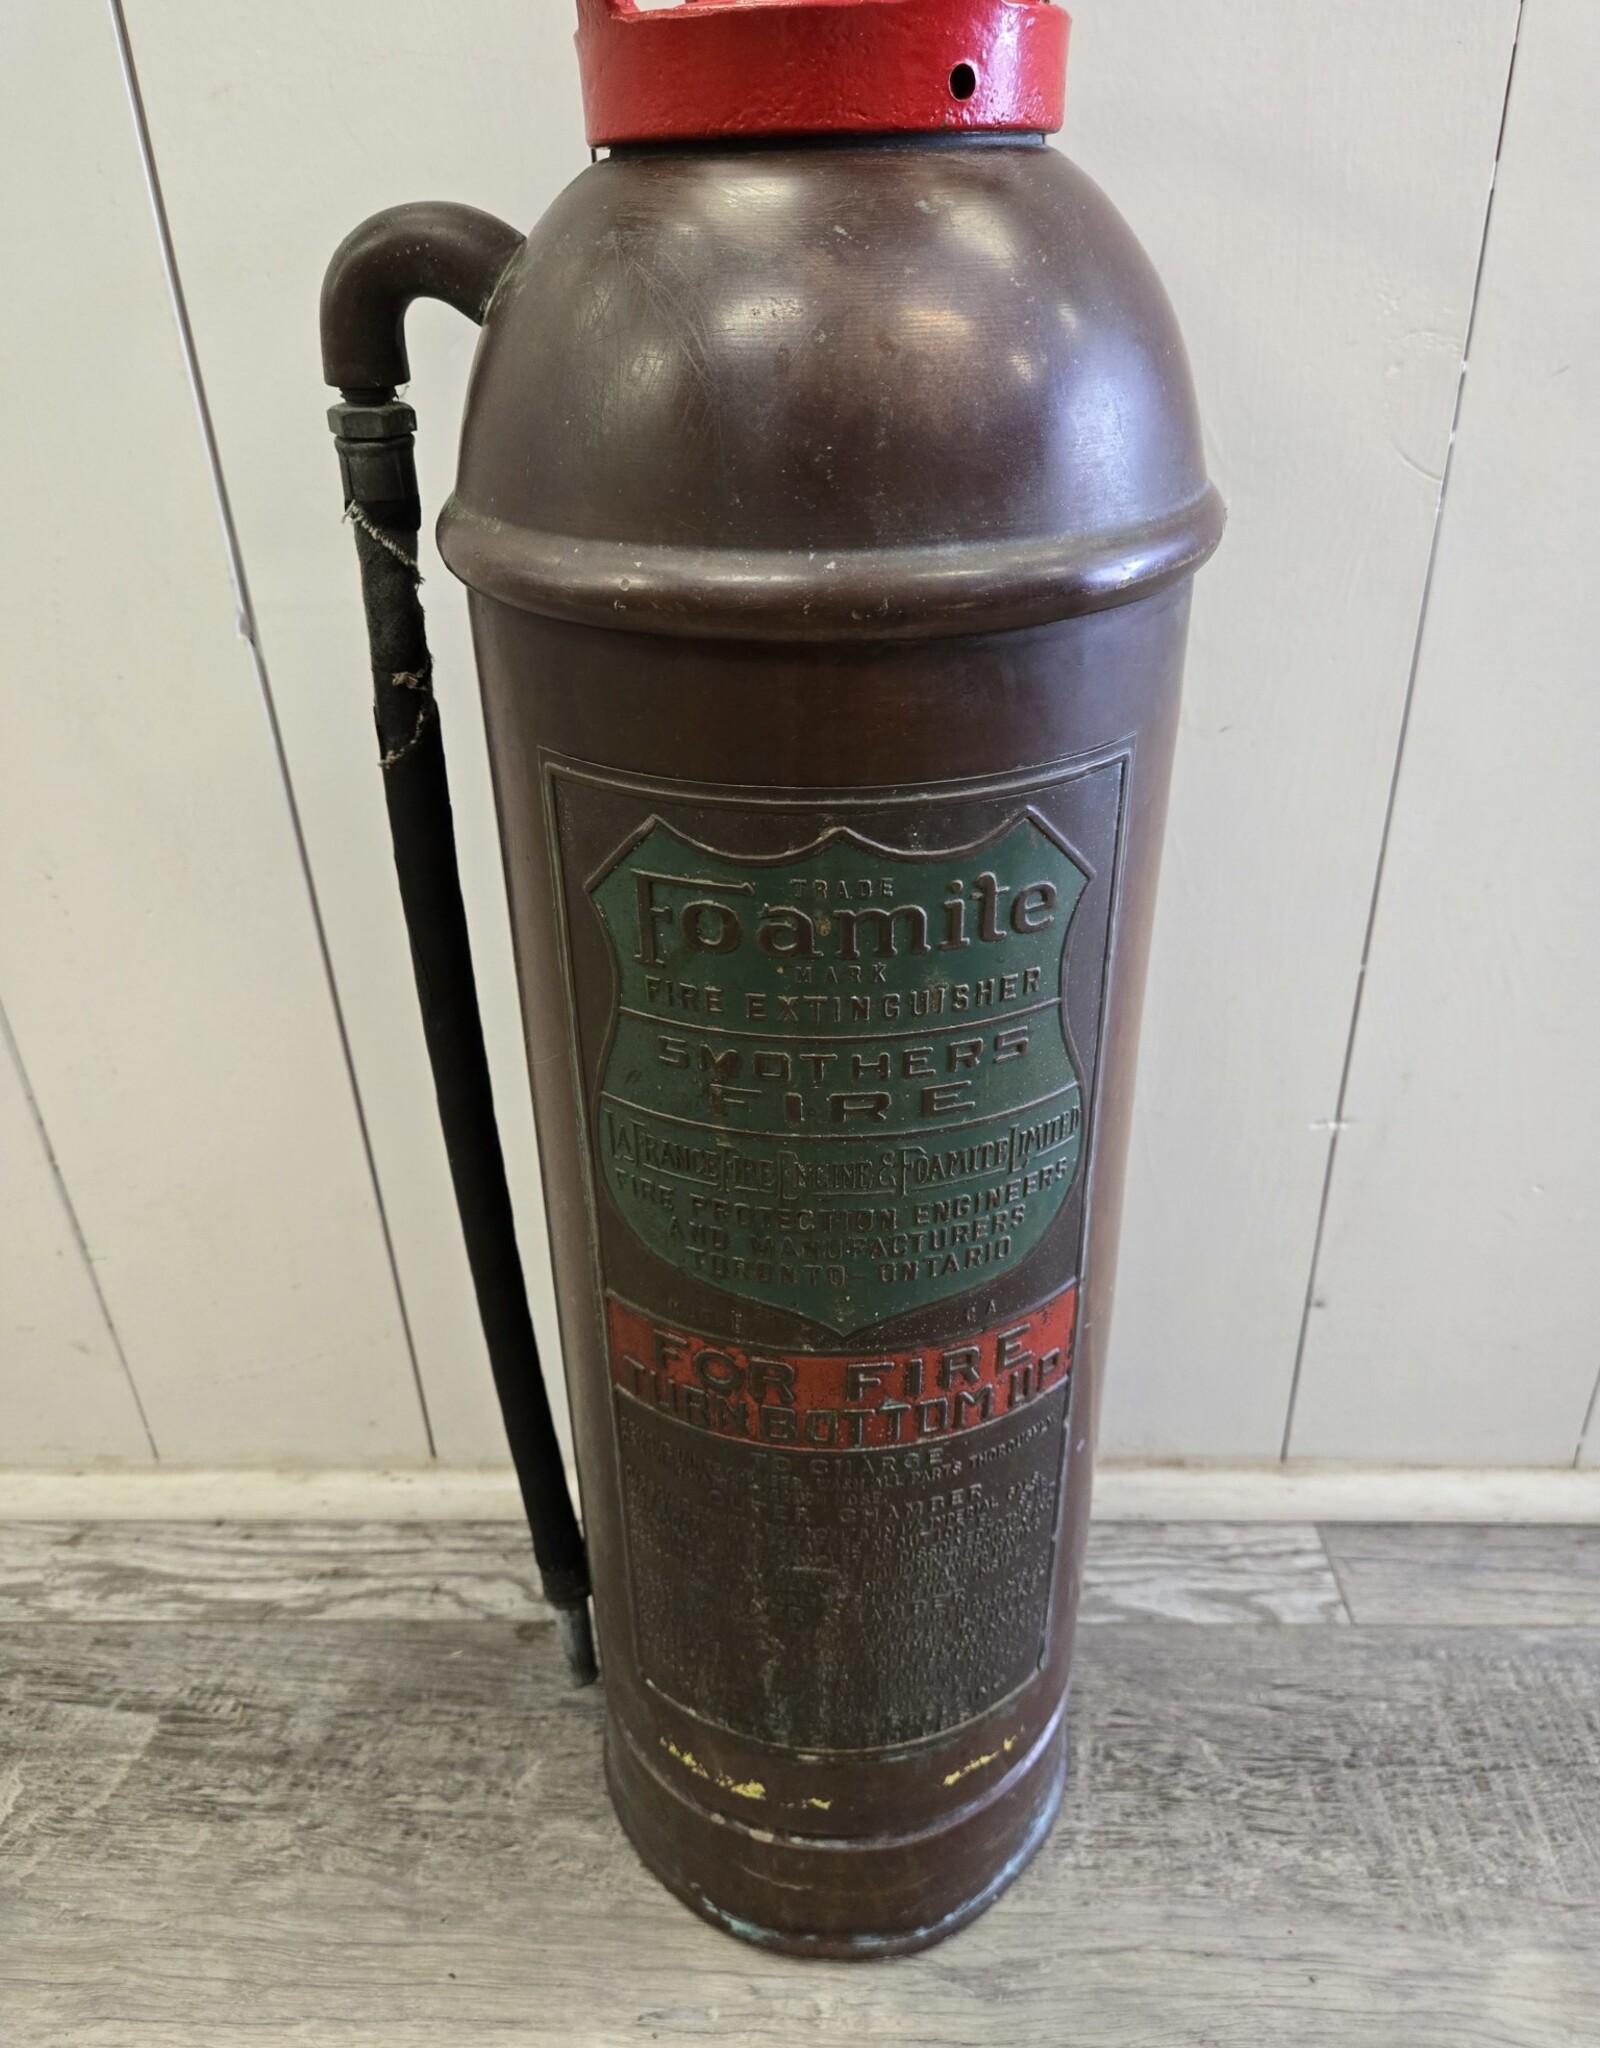 Antique Copper Foamite Fire Extinguisher